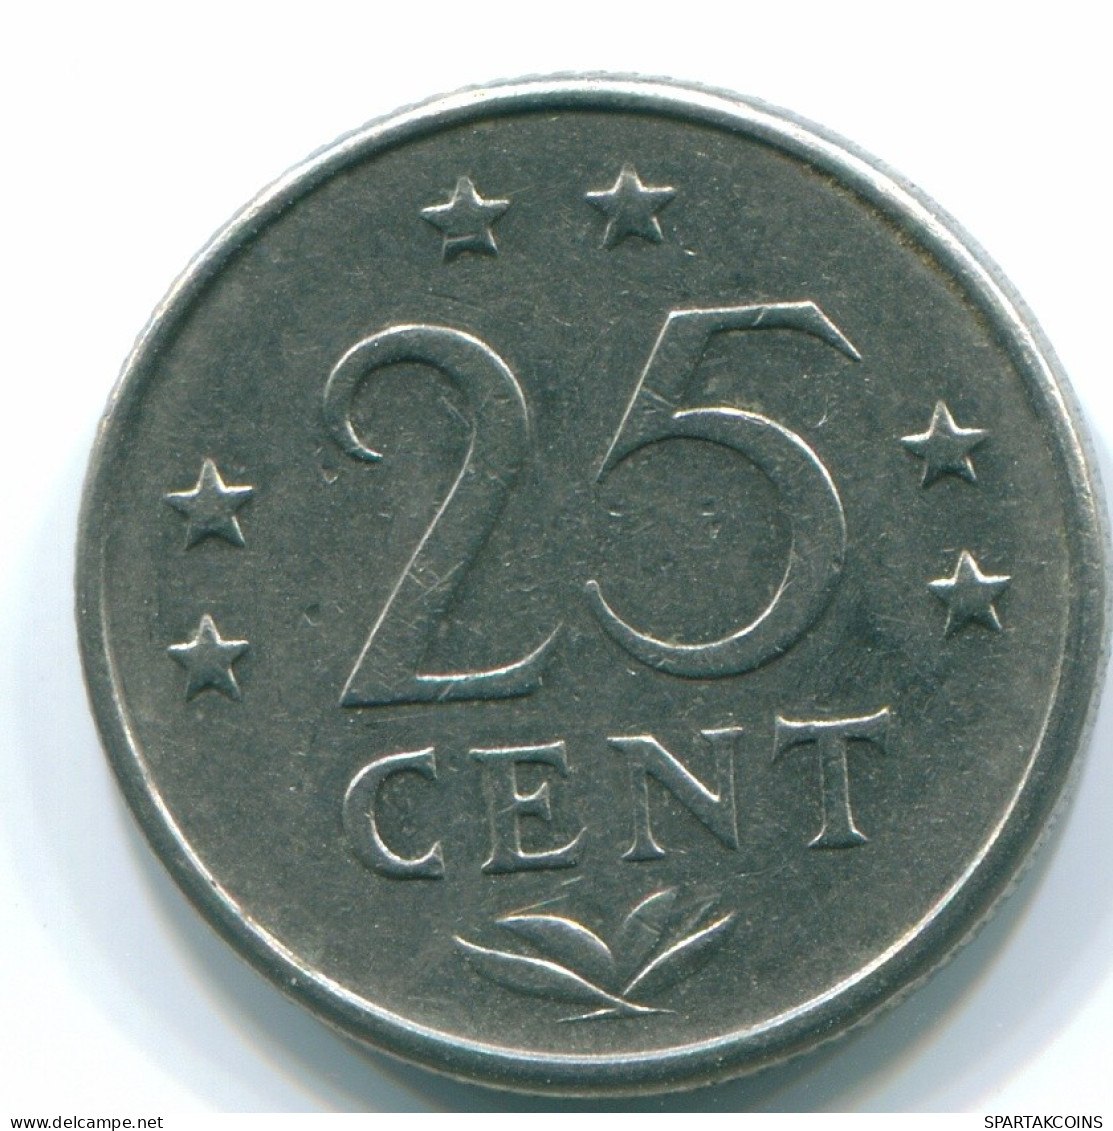 25 CENTS 1970 NIEDERLÄNDISCHE ANTILLEN Nickel Koloniale Münze #S11427.D.A - Nederlandse Antillen